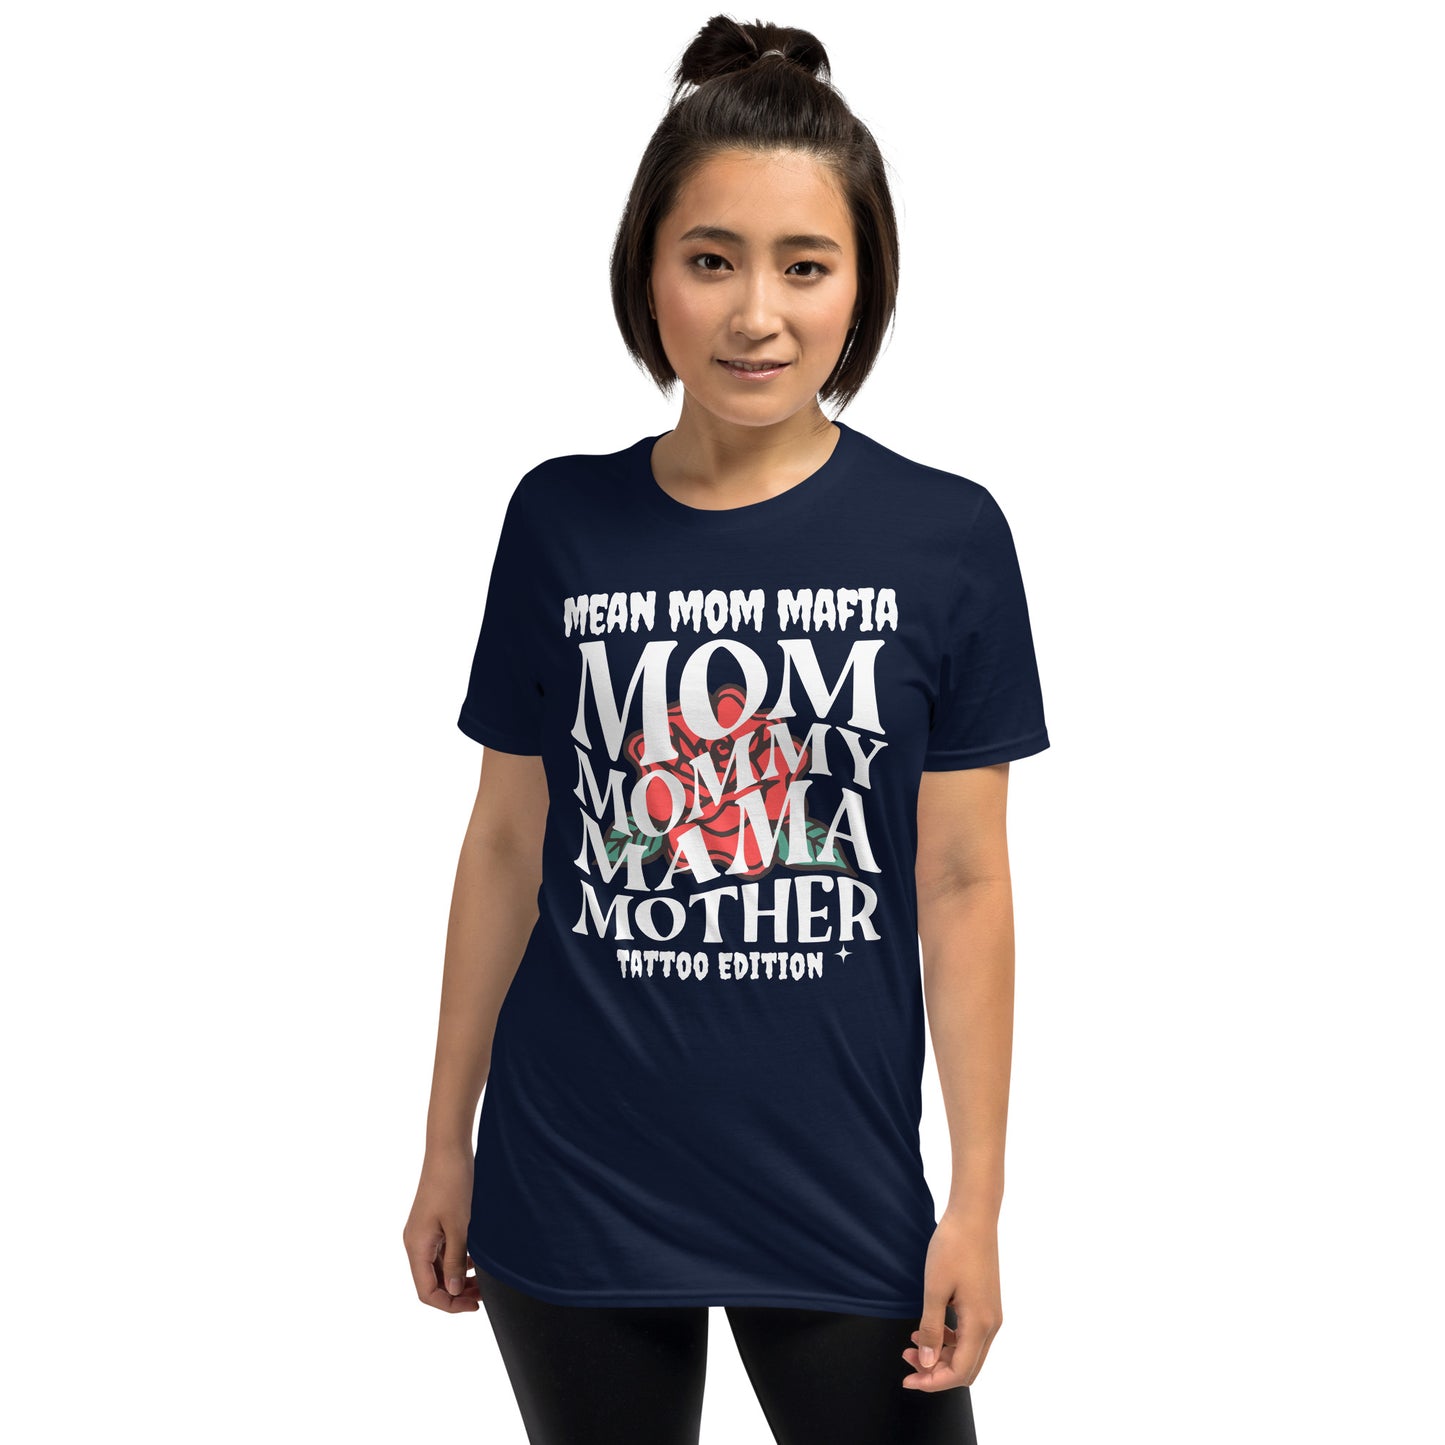 Tattoo Edition Mom Short-Sleeve Unisex T-Shirt